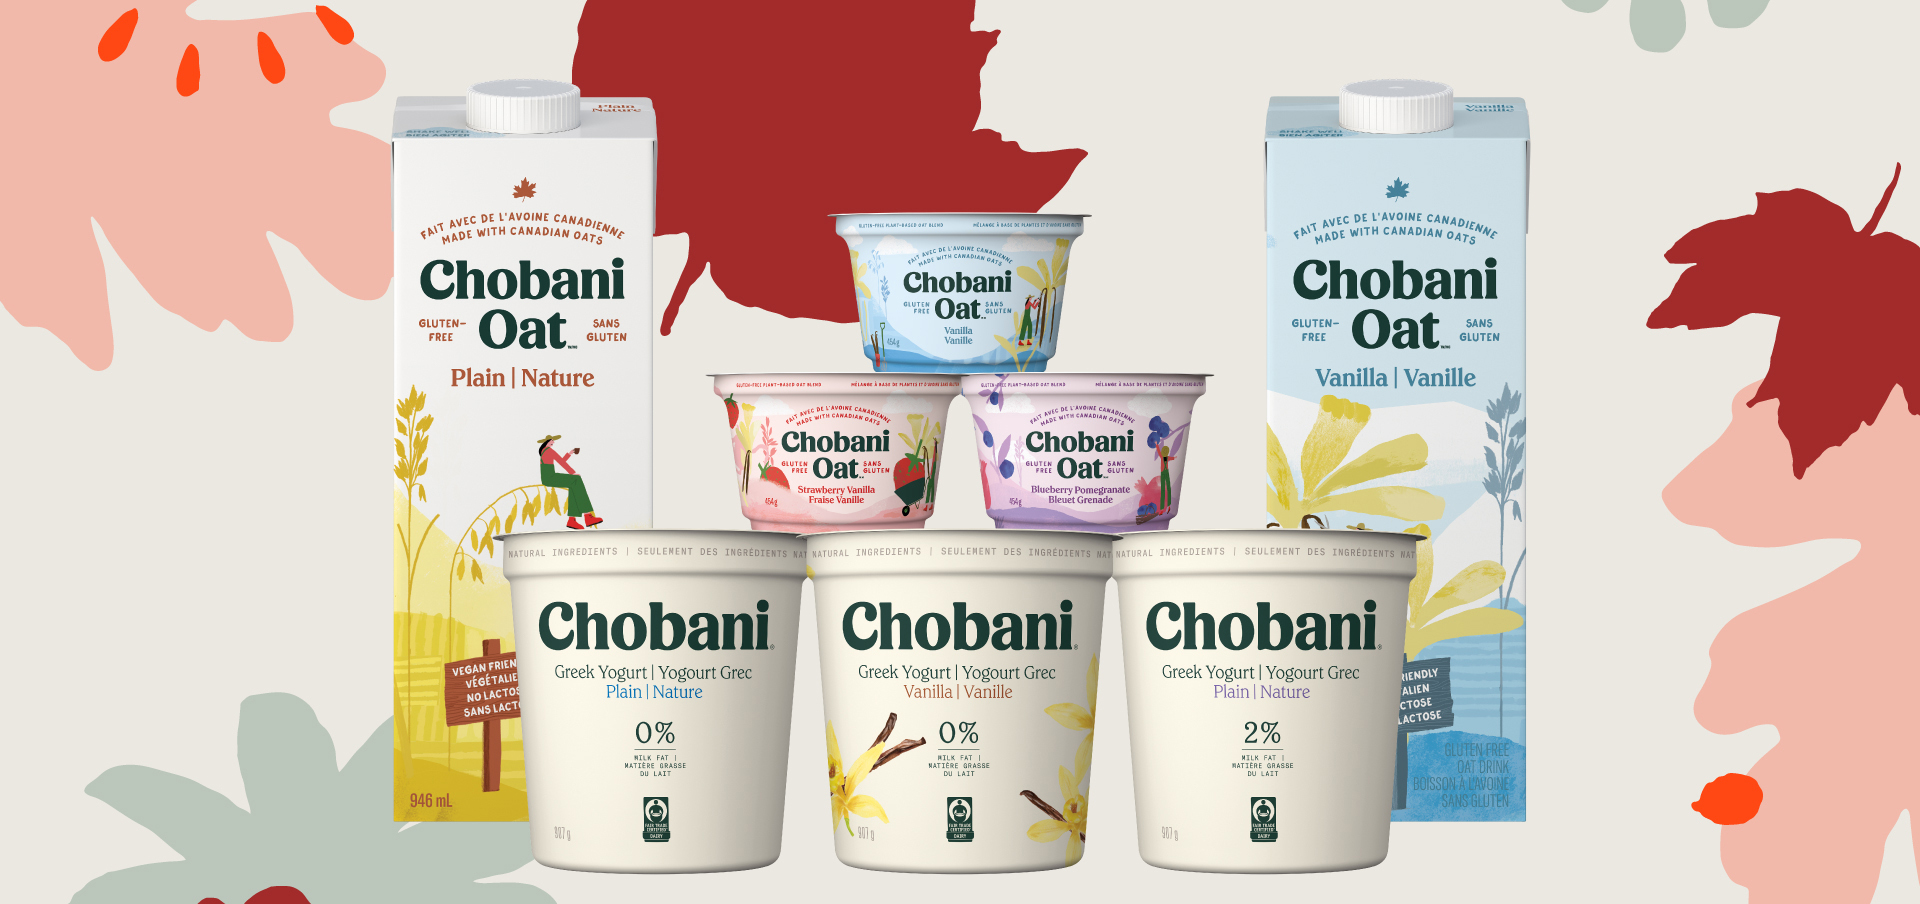 Chobani is bringing yogurt to Canada